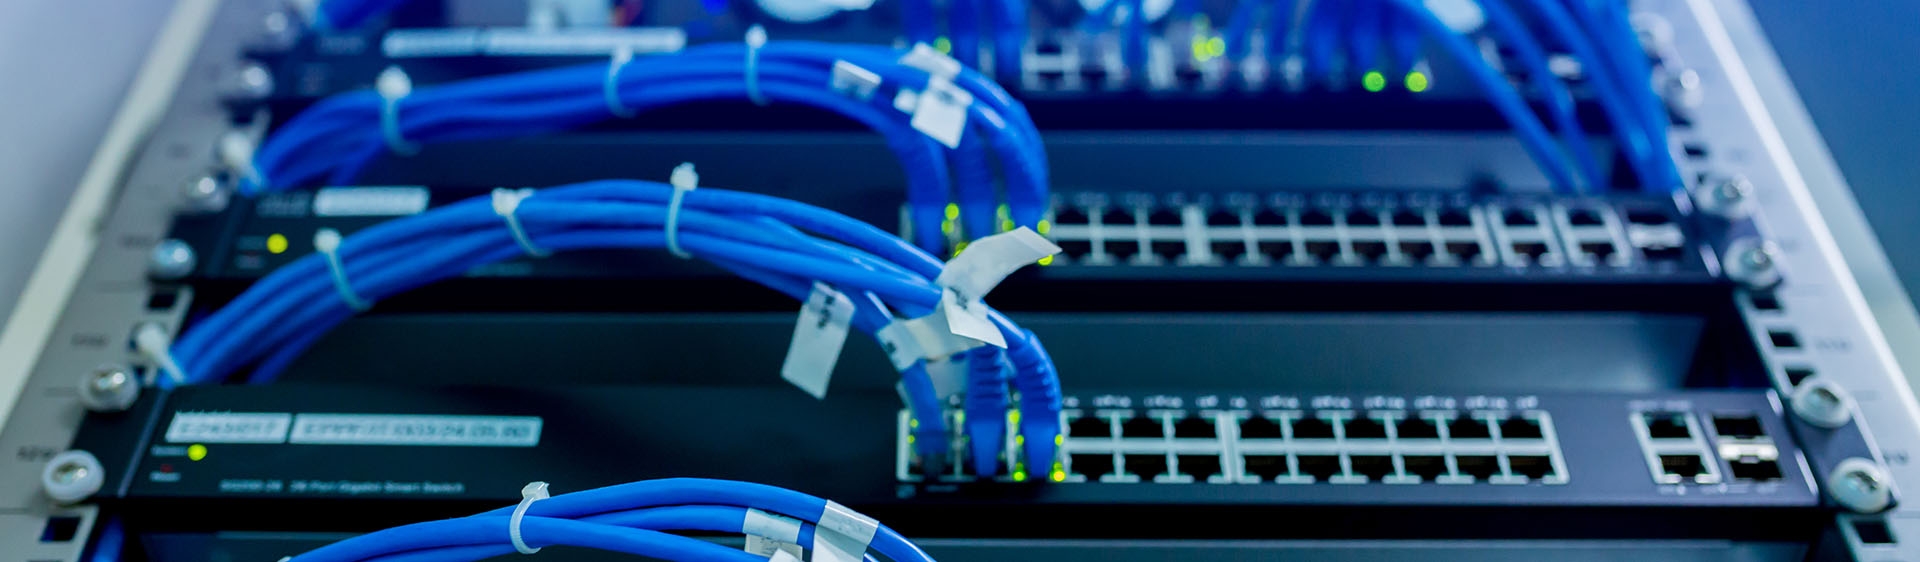 Madera Wireless Internet Installation, Fiber Optic Internet Installation and Network Cable Installation